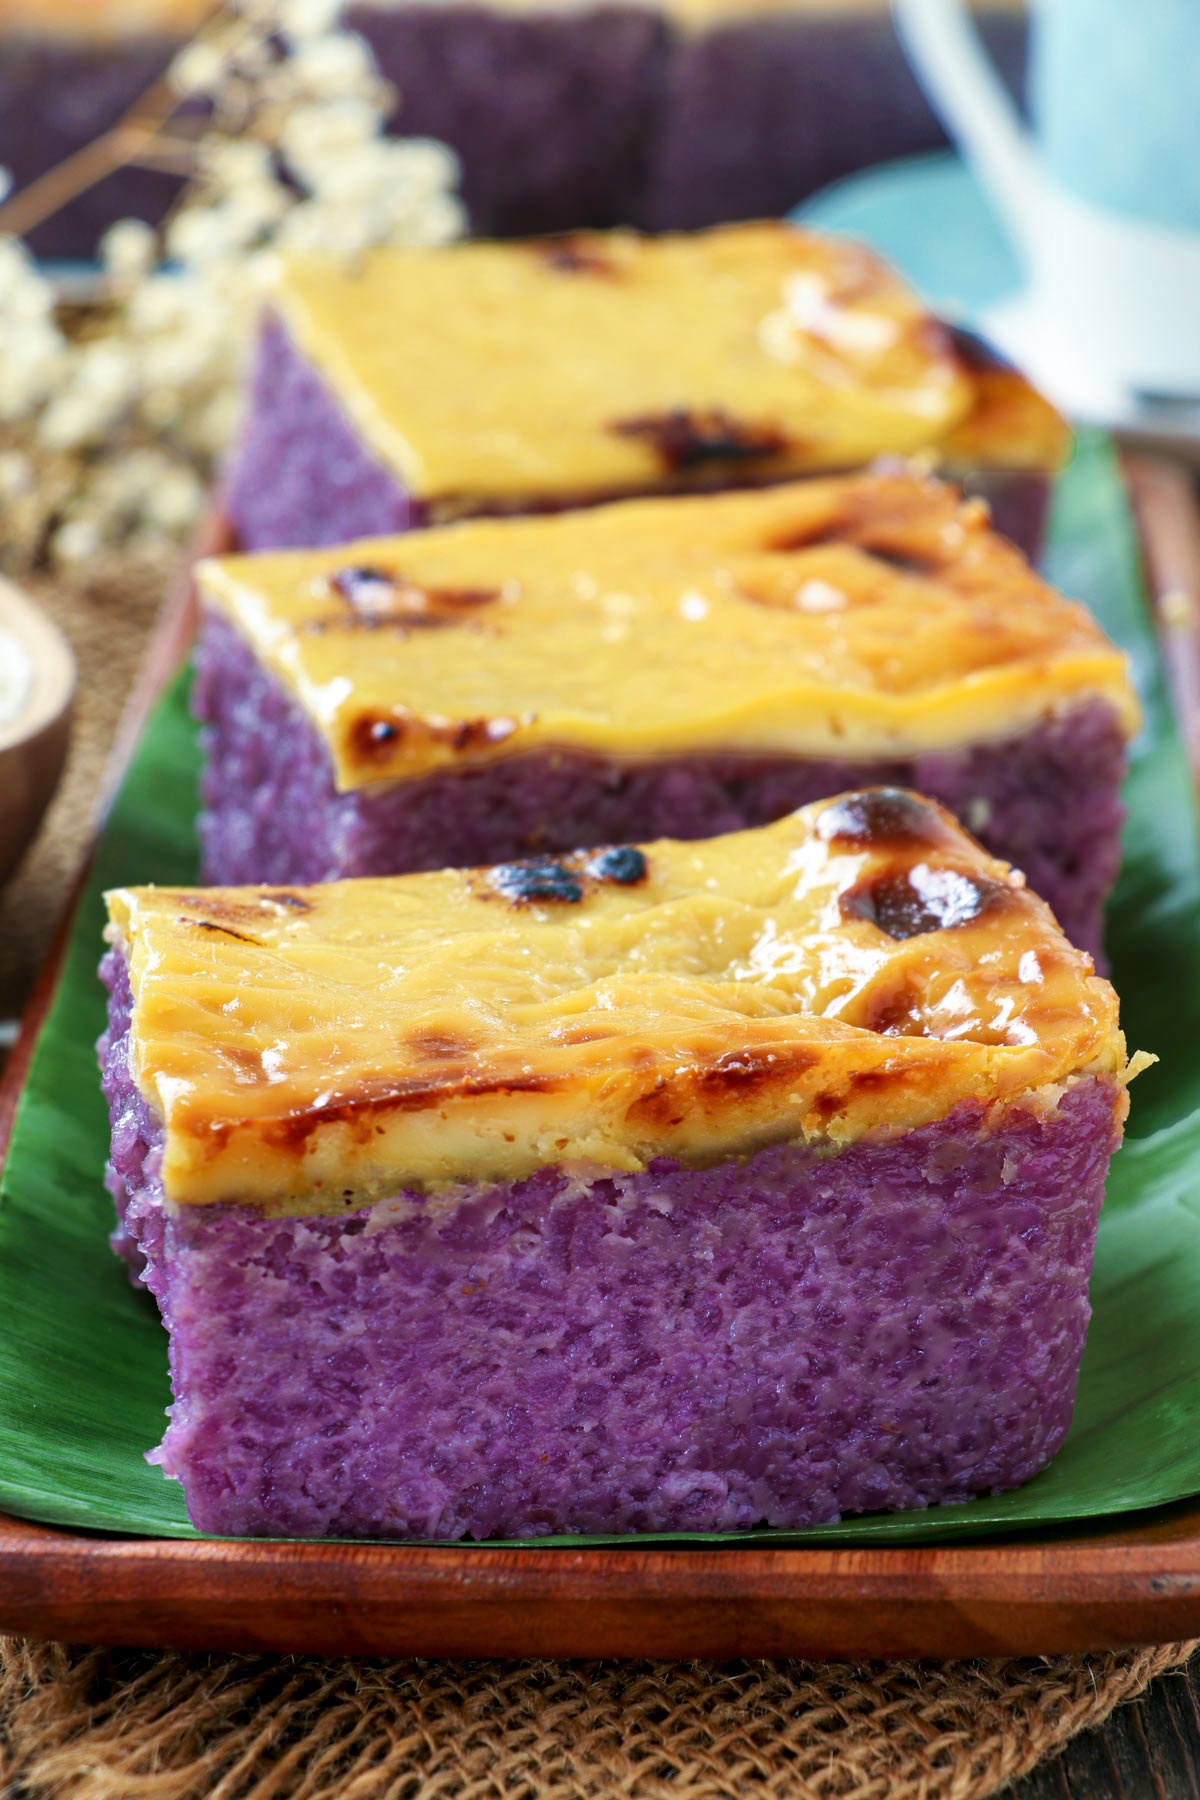 Ube Biko - is a sticky rice cake with purple yam.